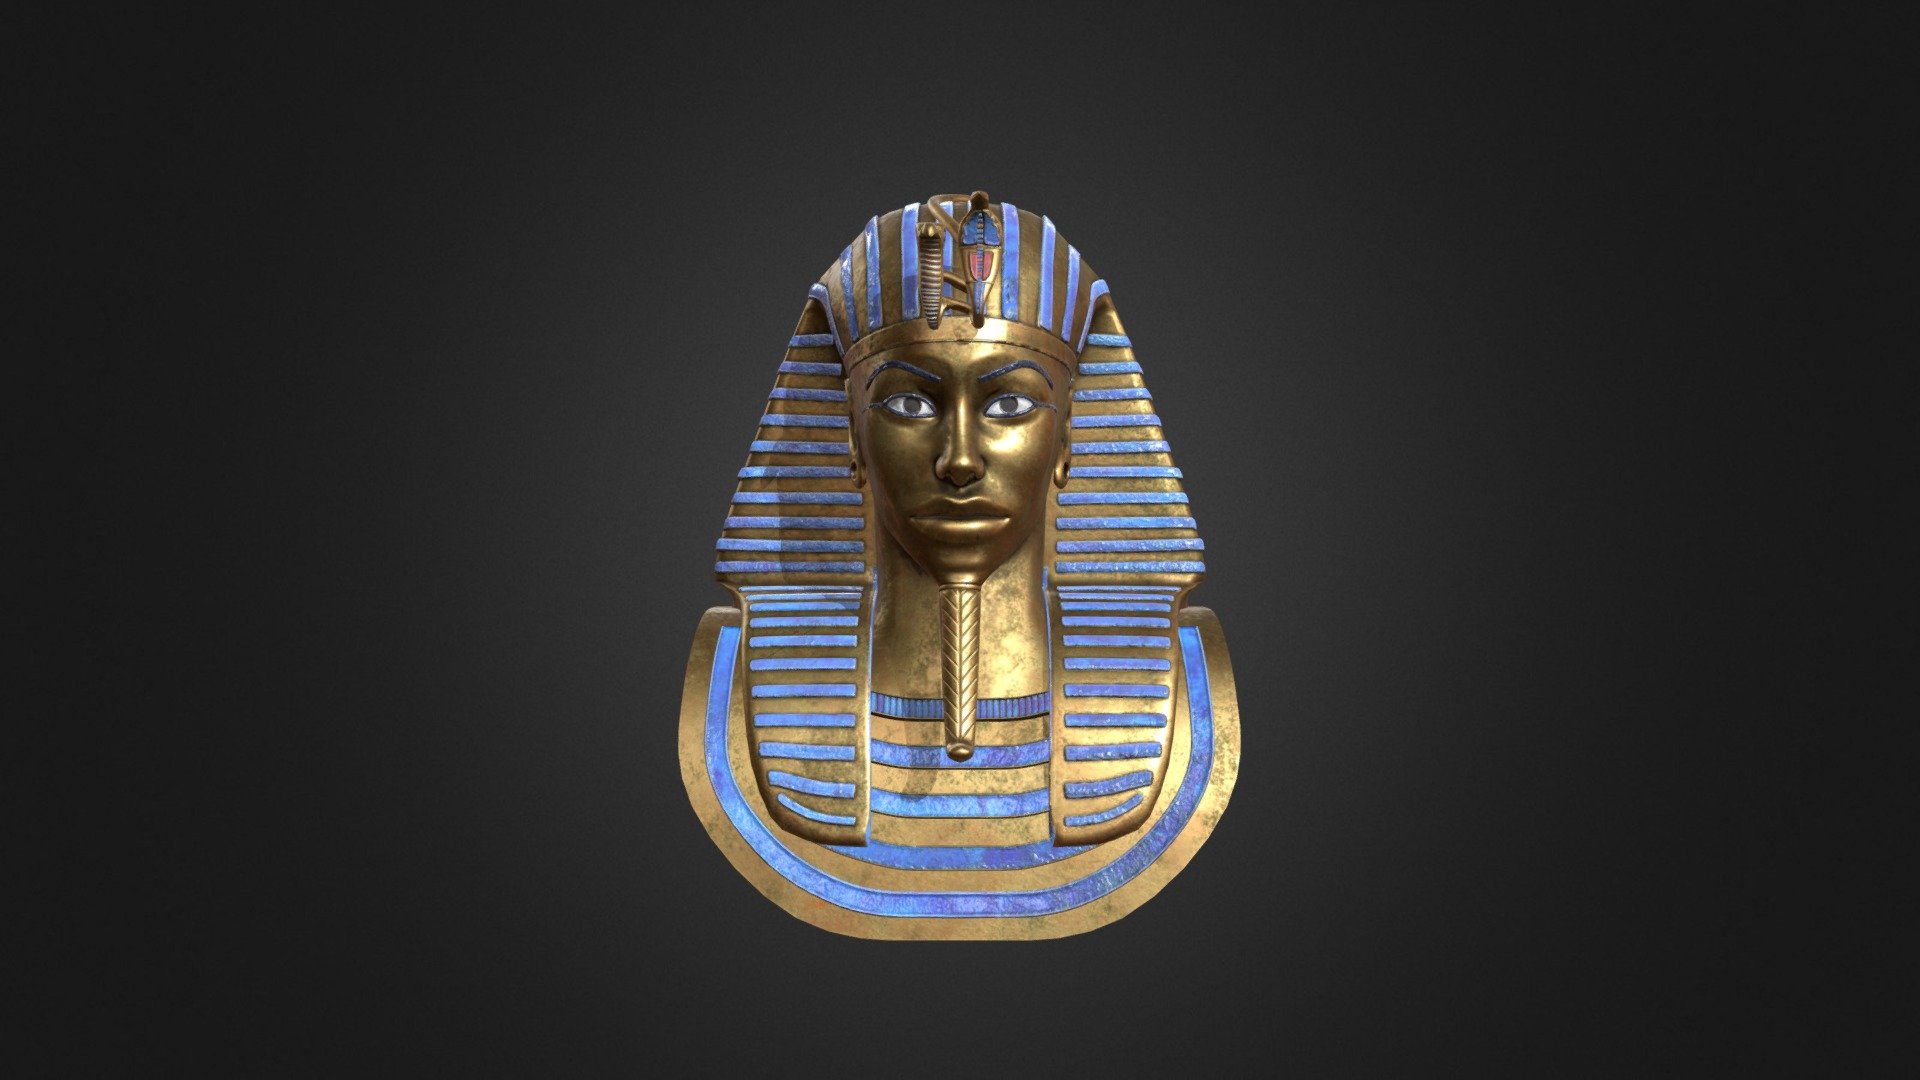 Mask of Tutankhamun

Mask of the ancient egypt pharaoh Tutankhamun 3d model